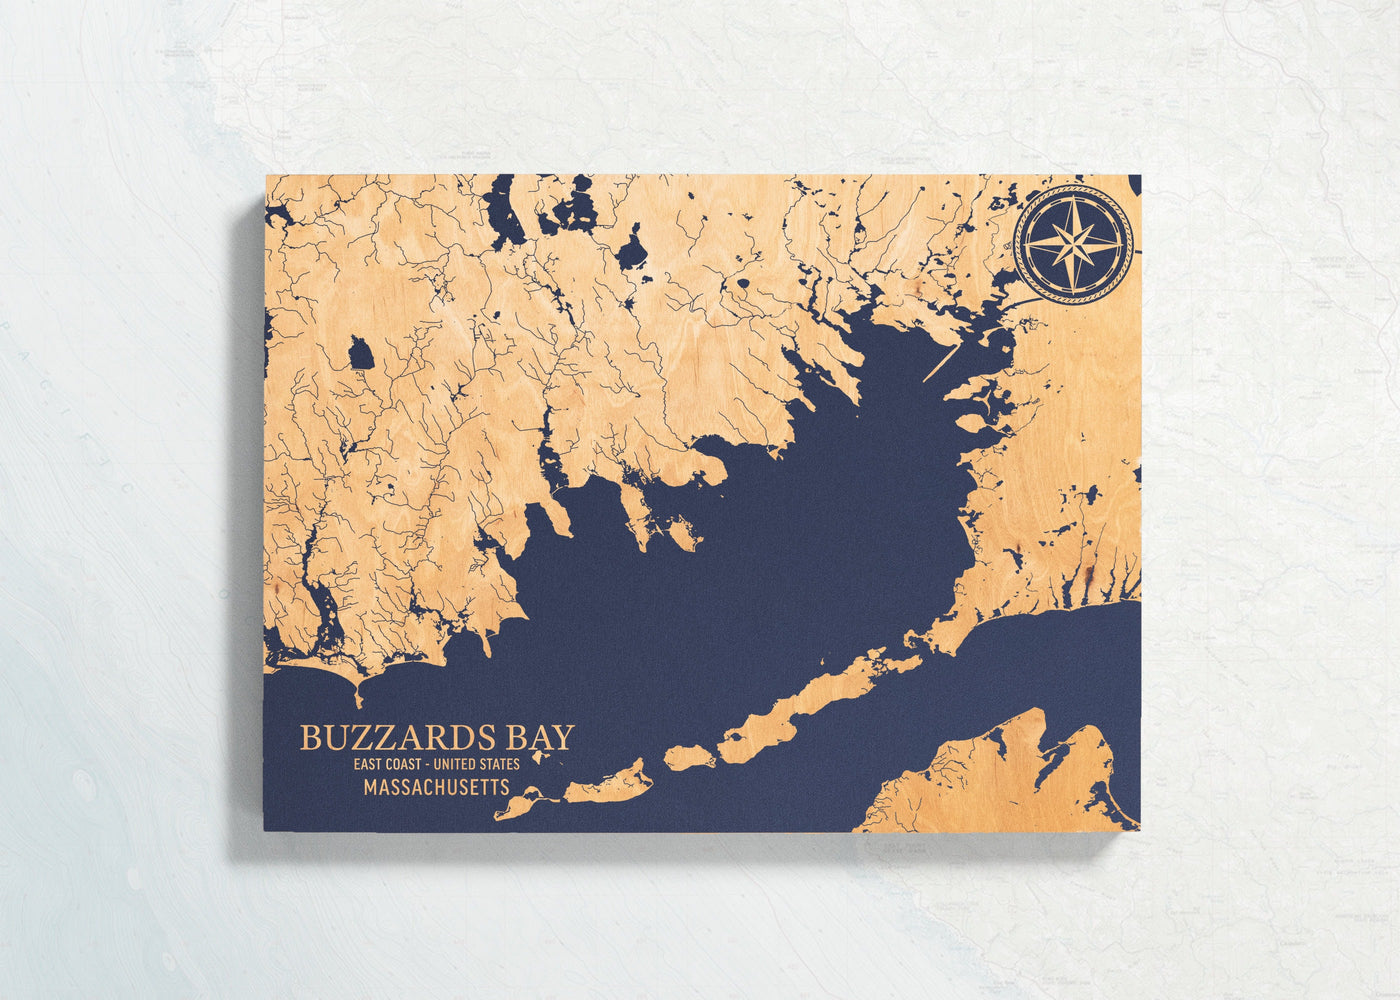 Buzzards Bay, Massachusetts